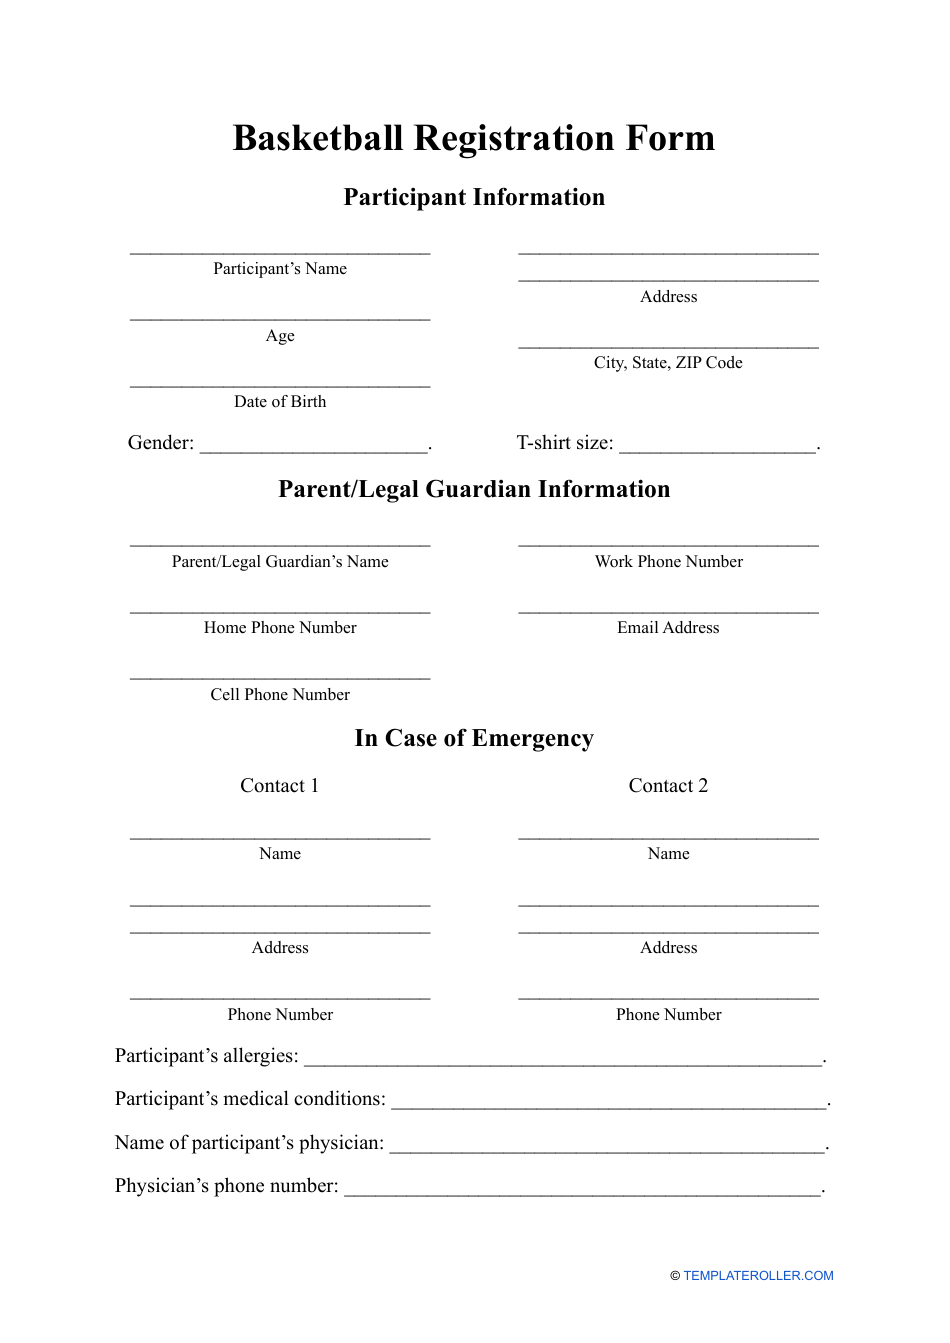 Basketball Registration Form, Page 1